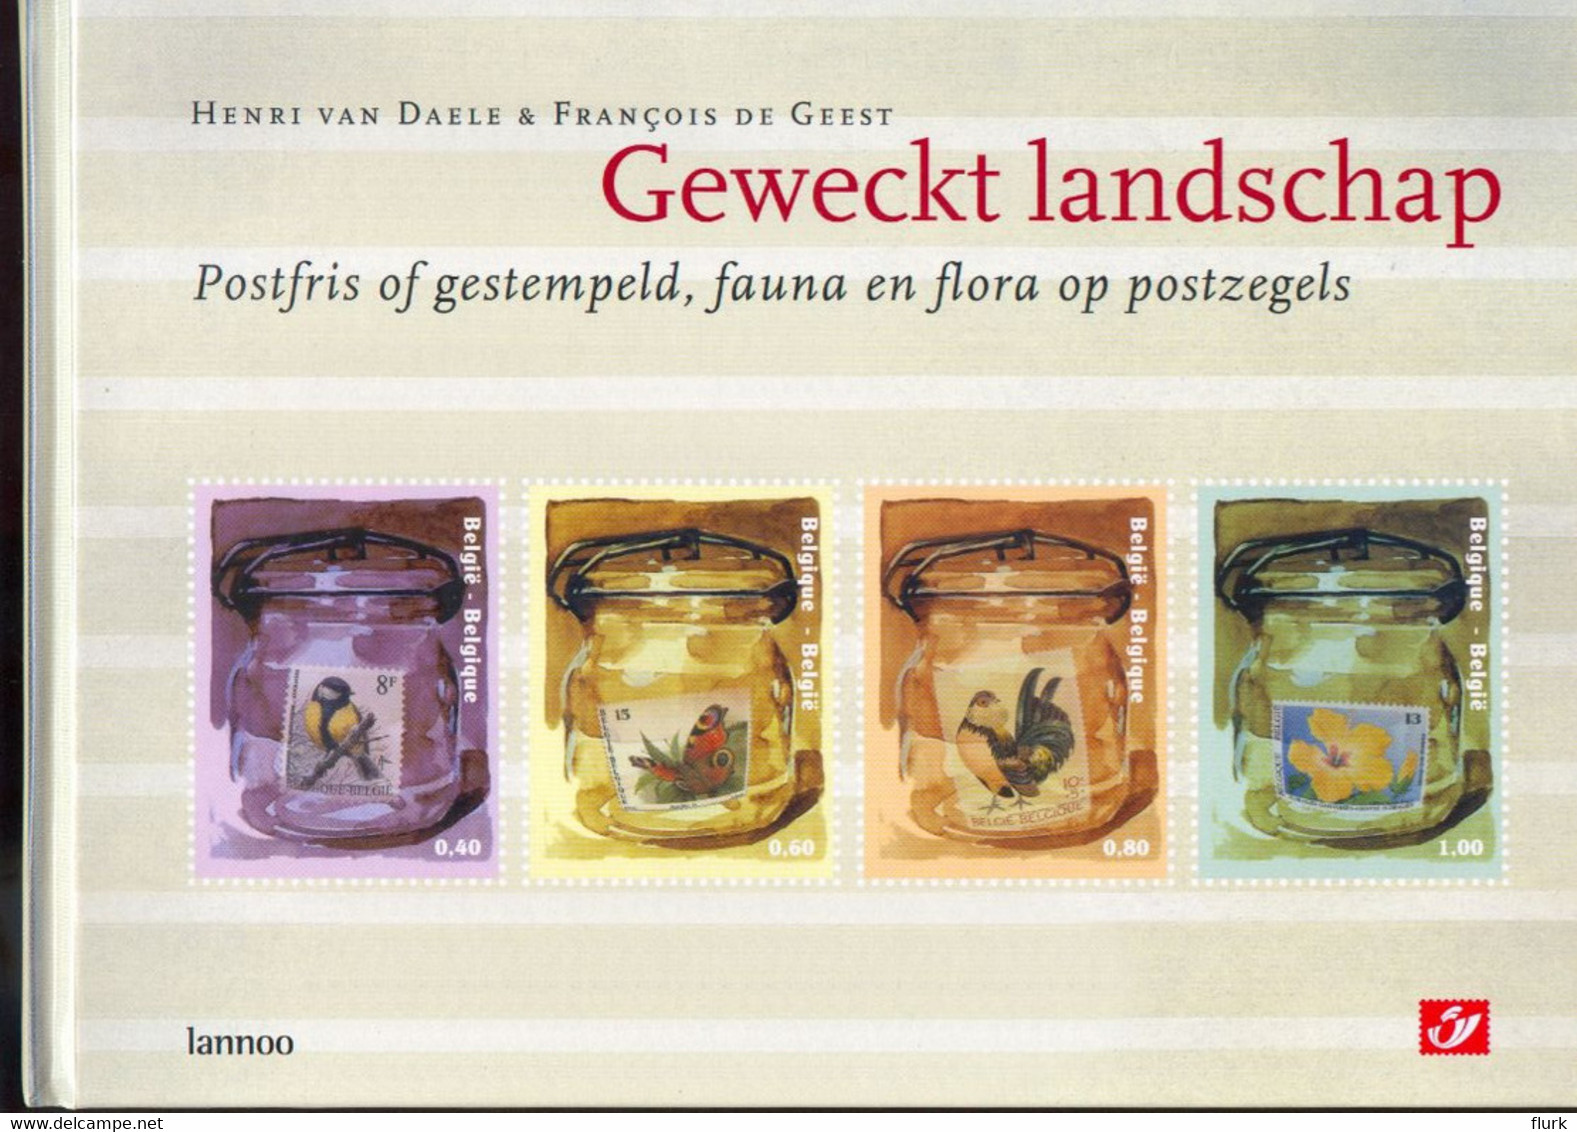 Geweckt Landschap Postfris Of Gestempeld, Fauna En Flora Op Postzegels Perfect - Topics